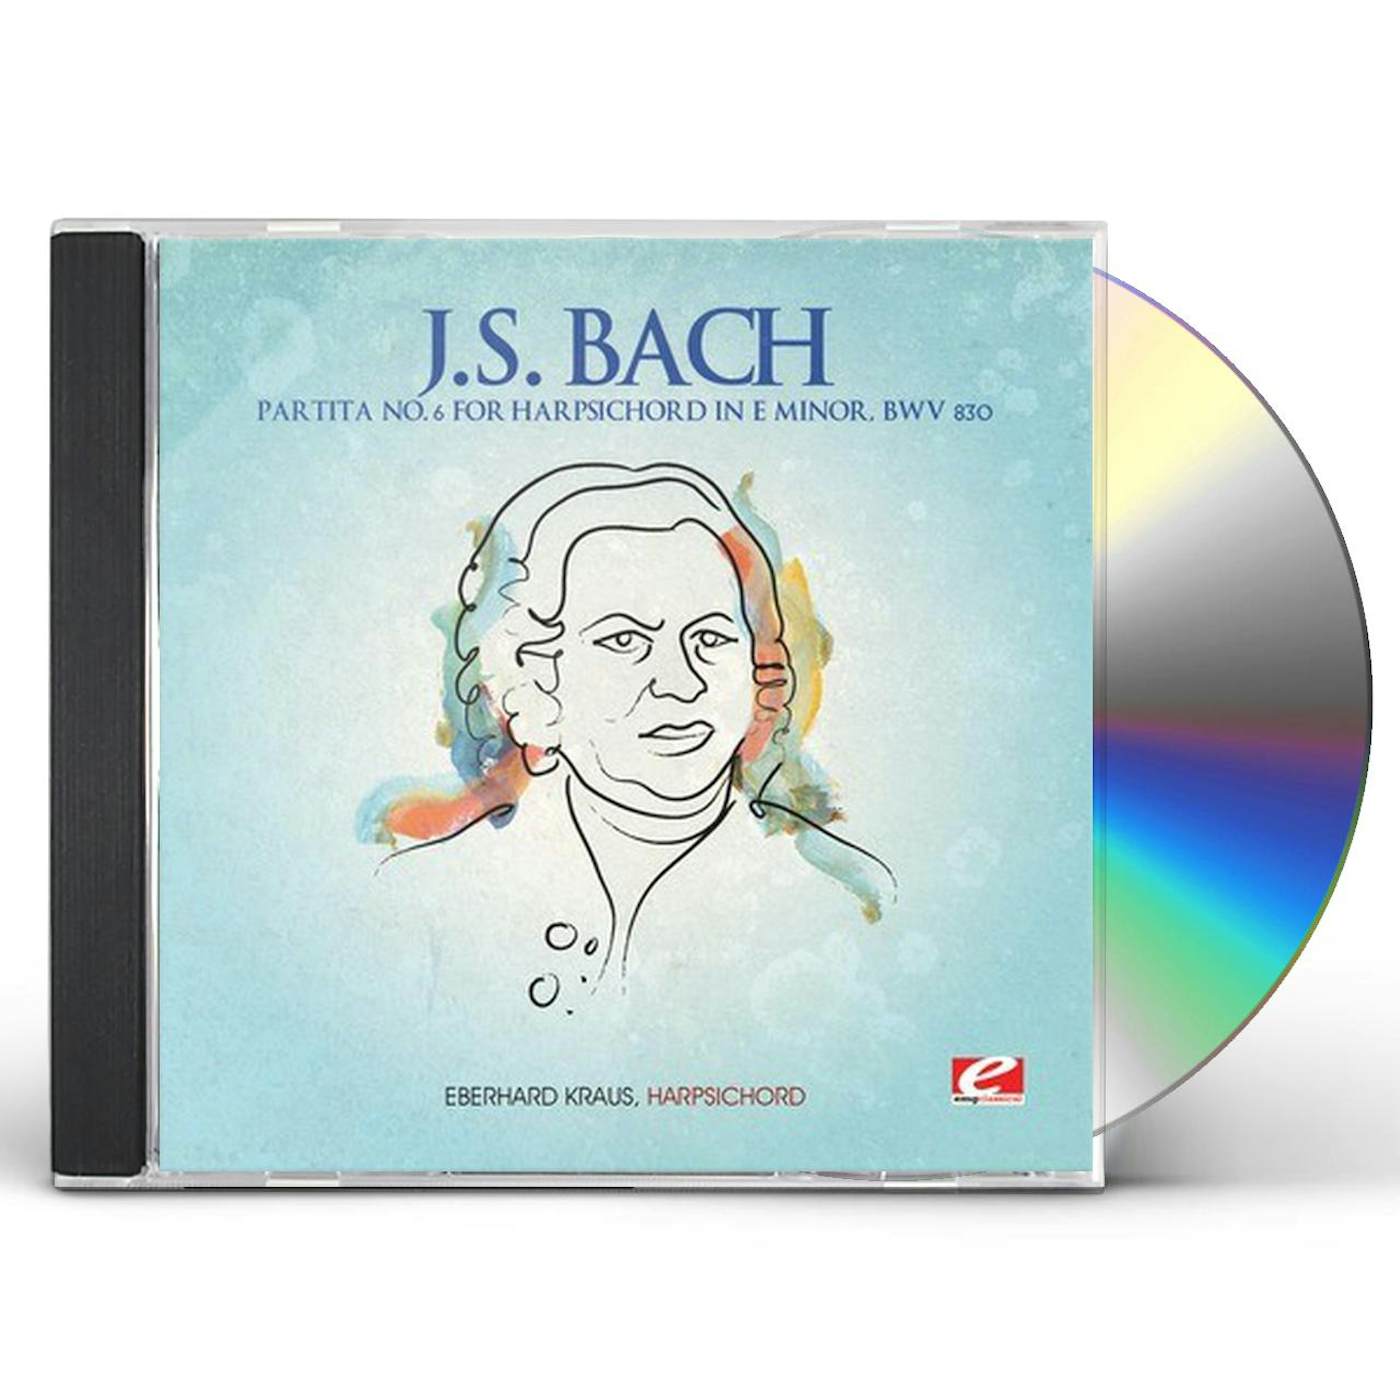 Johann Sebastian Bach PARTITA NO. 6 FOR HARPSICHORD IN E MINOR CD